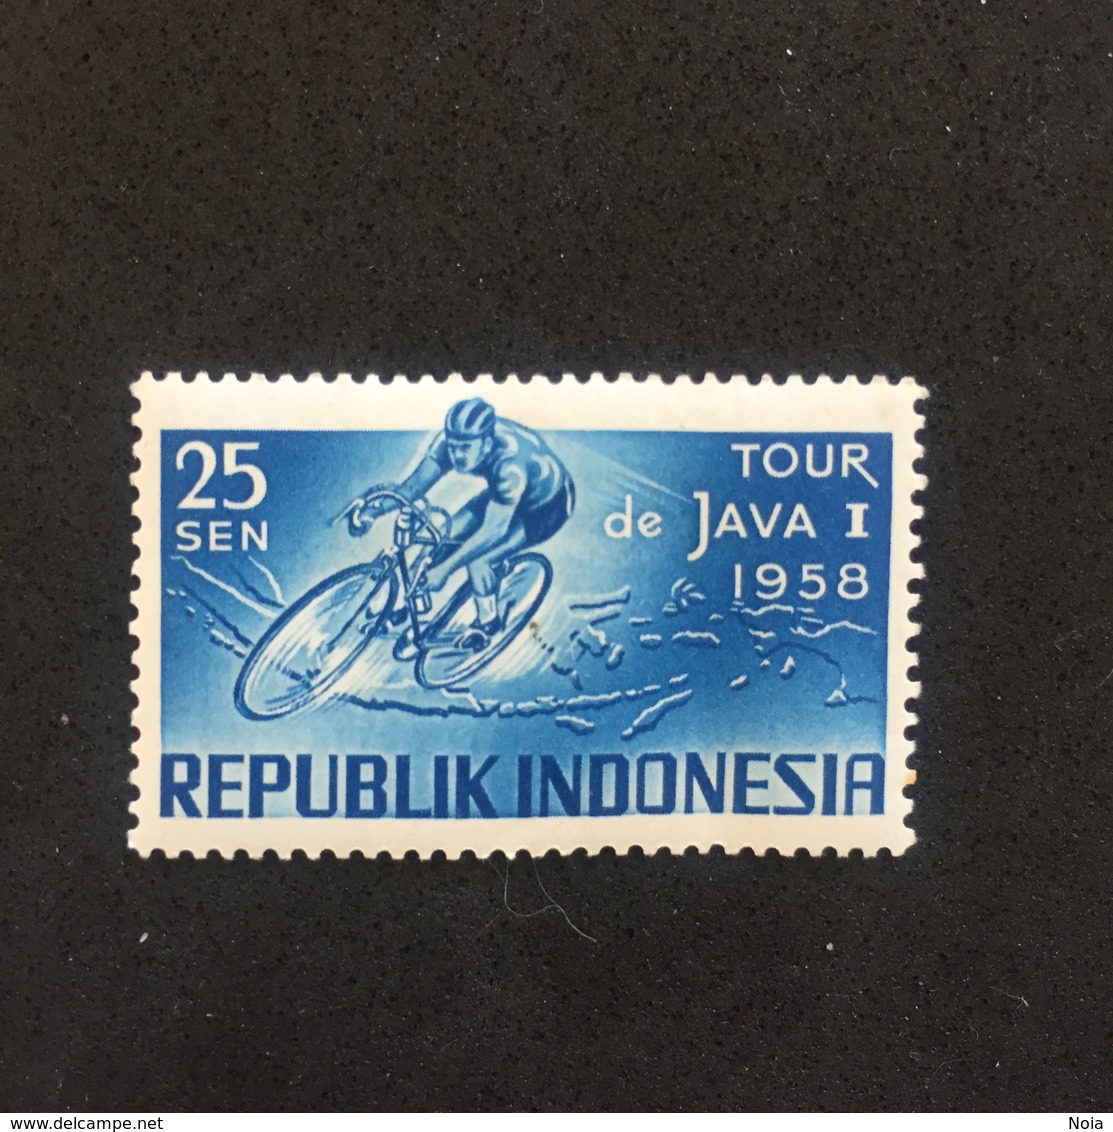 INDONESIA. JAVA TOUR 1958. MNH. C3703A - Cycling